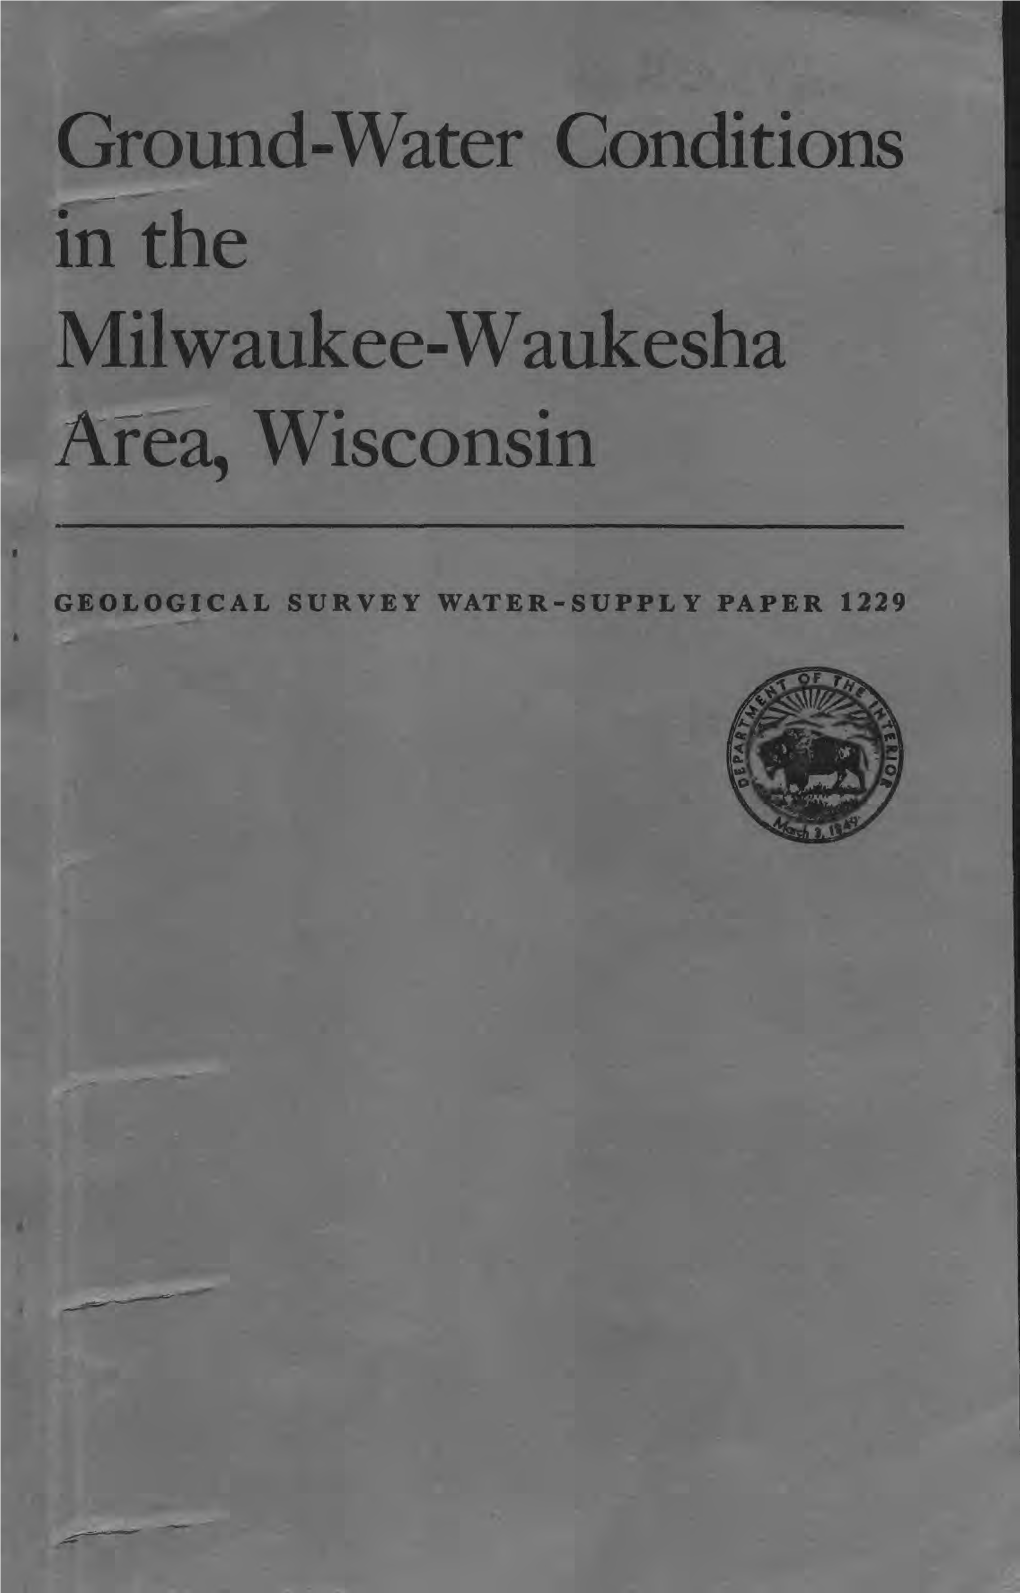 Ground-Water Conditions in the Milwaukee-Waukesha Area, Wisconsin